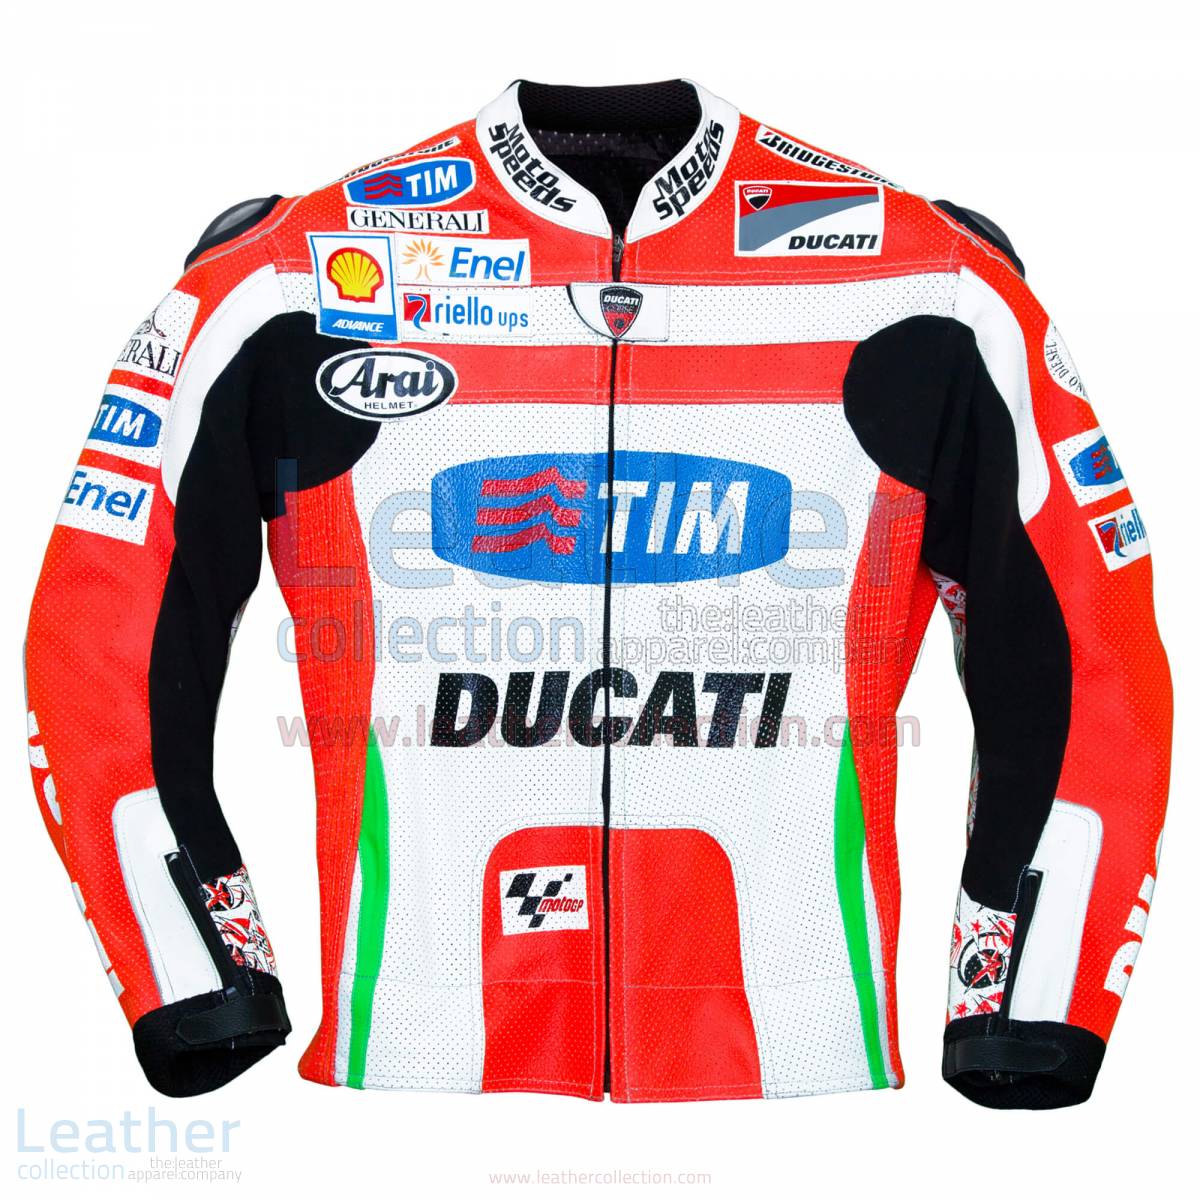 Ducati leather jacket